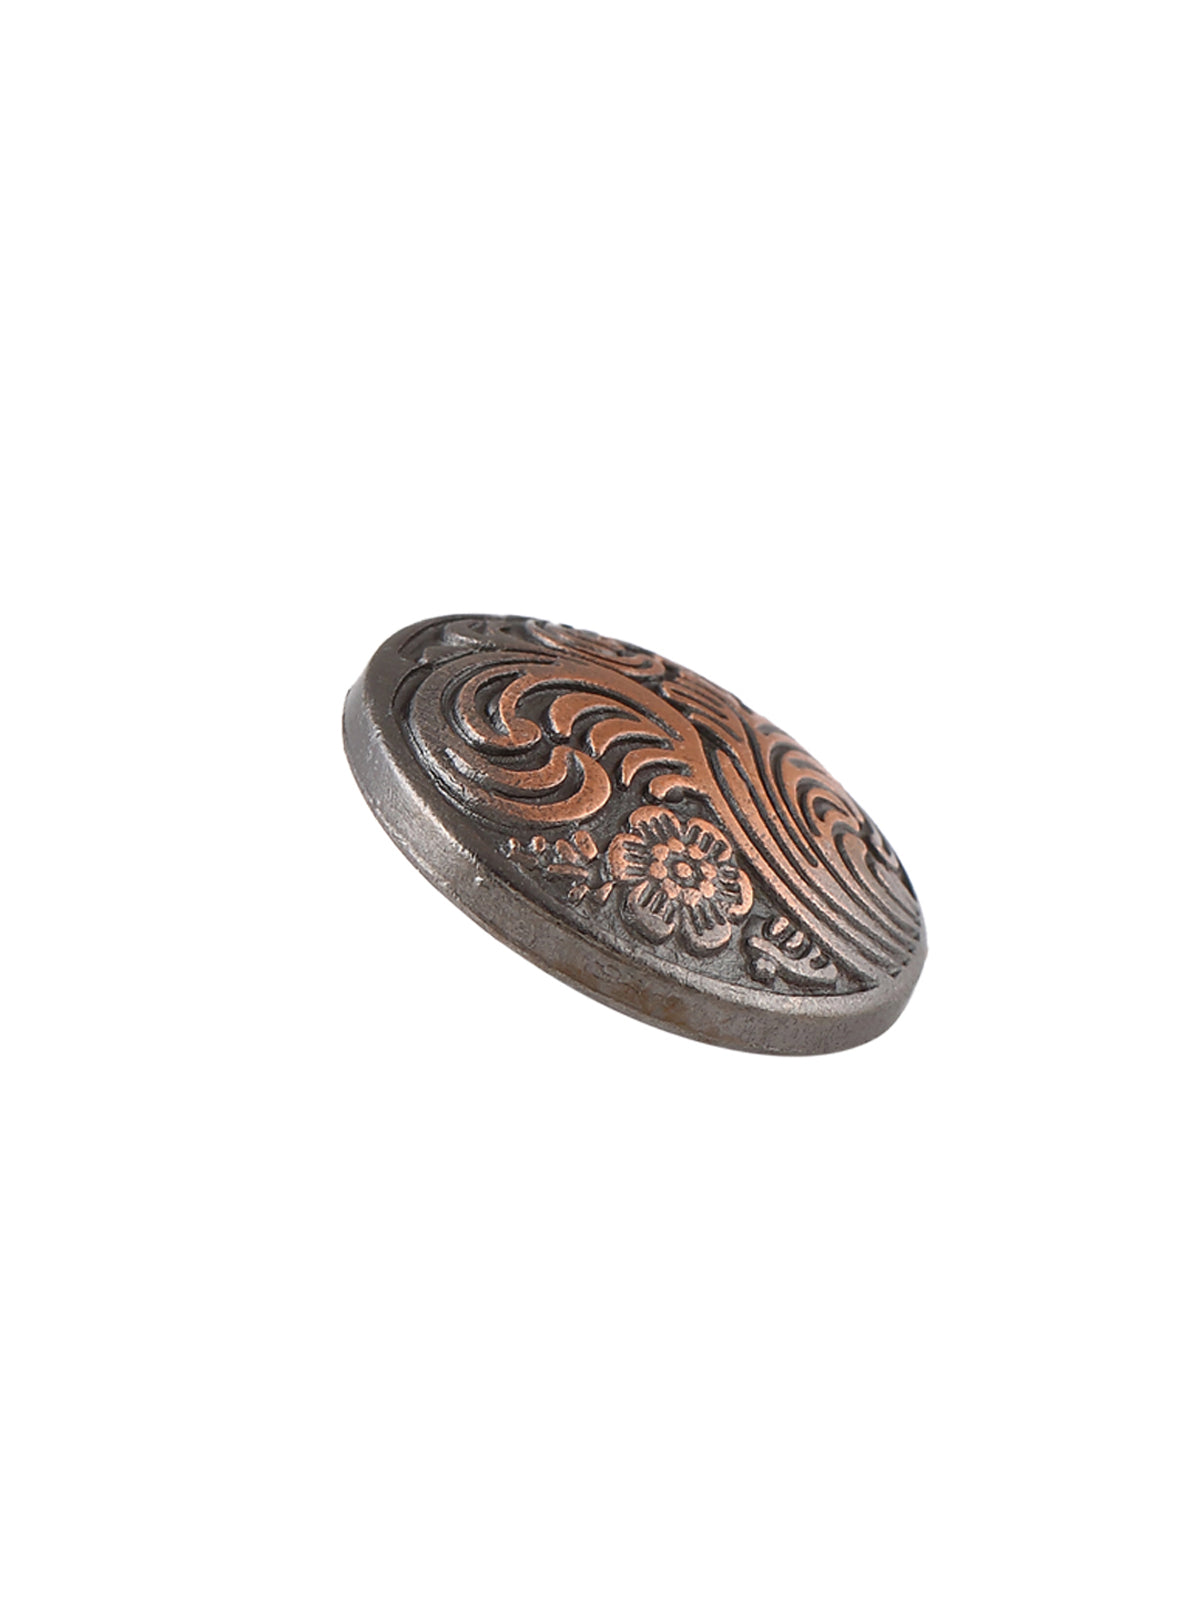 Historic Design Antique Copper Coat Button